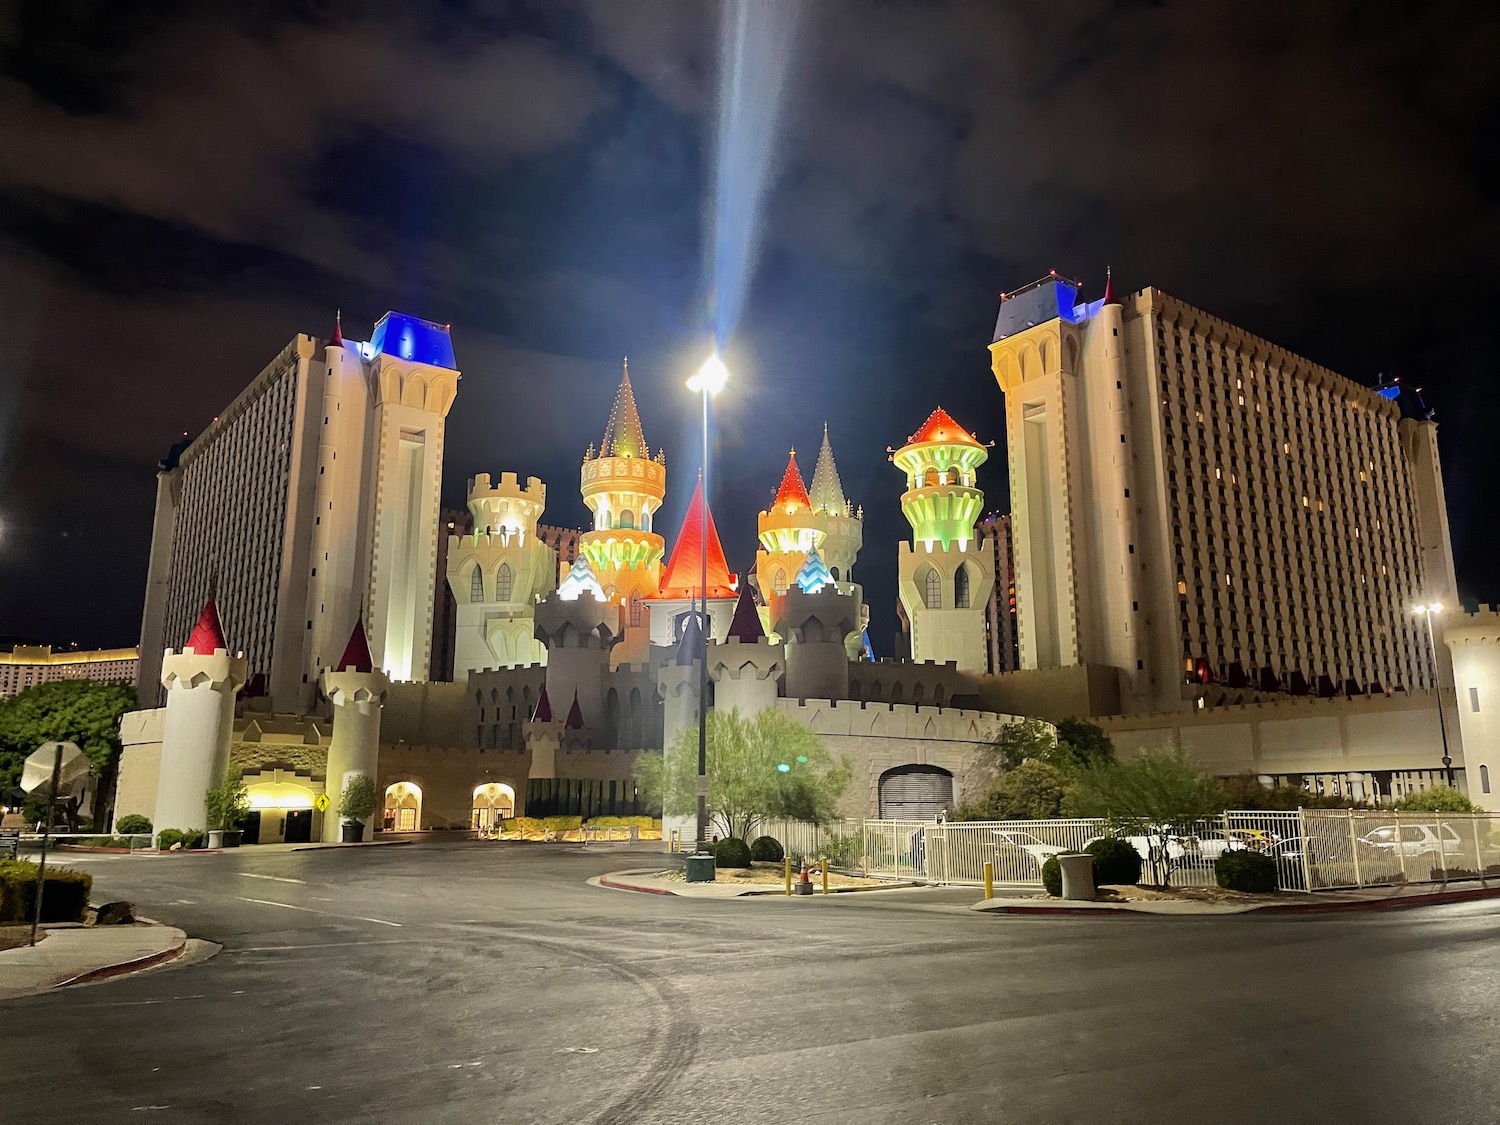 Tournament Of Kings - Excalibur Hotel & Casino, Las Vegas, NV - Tickets,  information, reviews